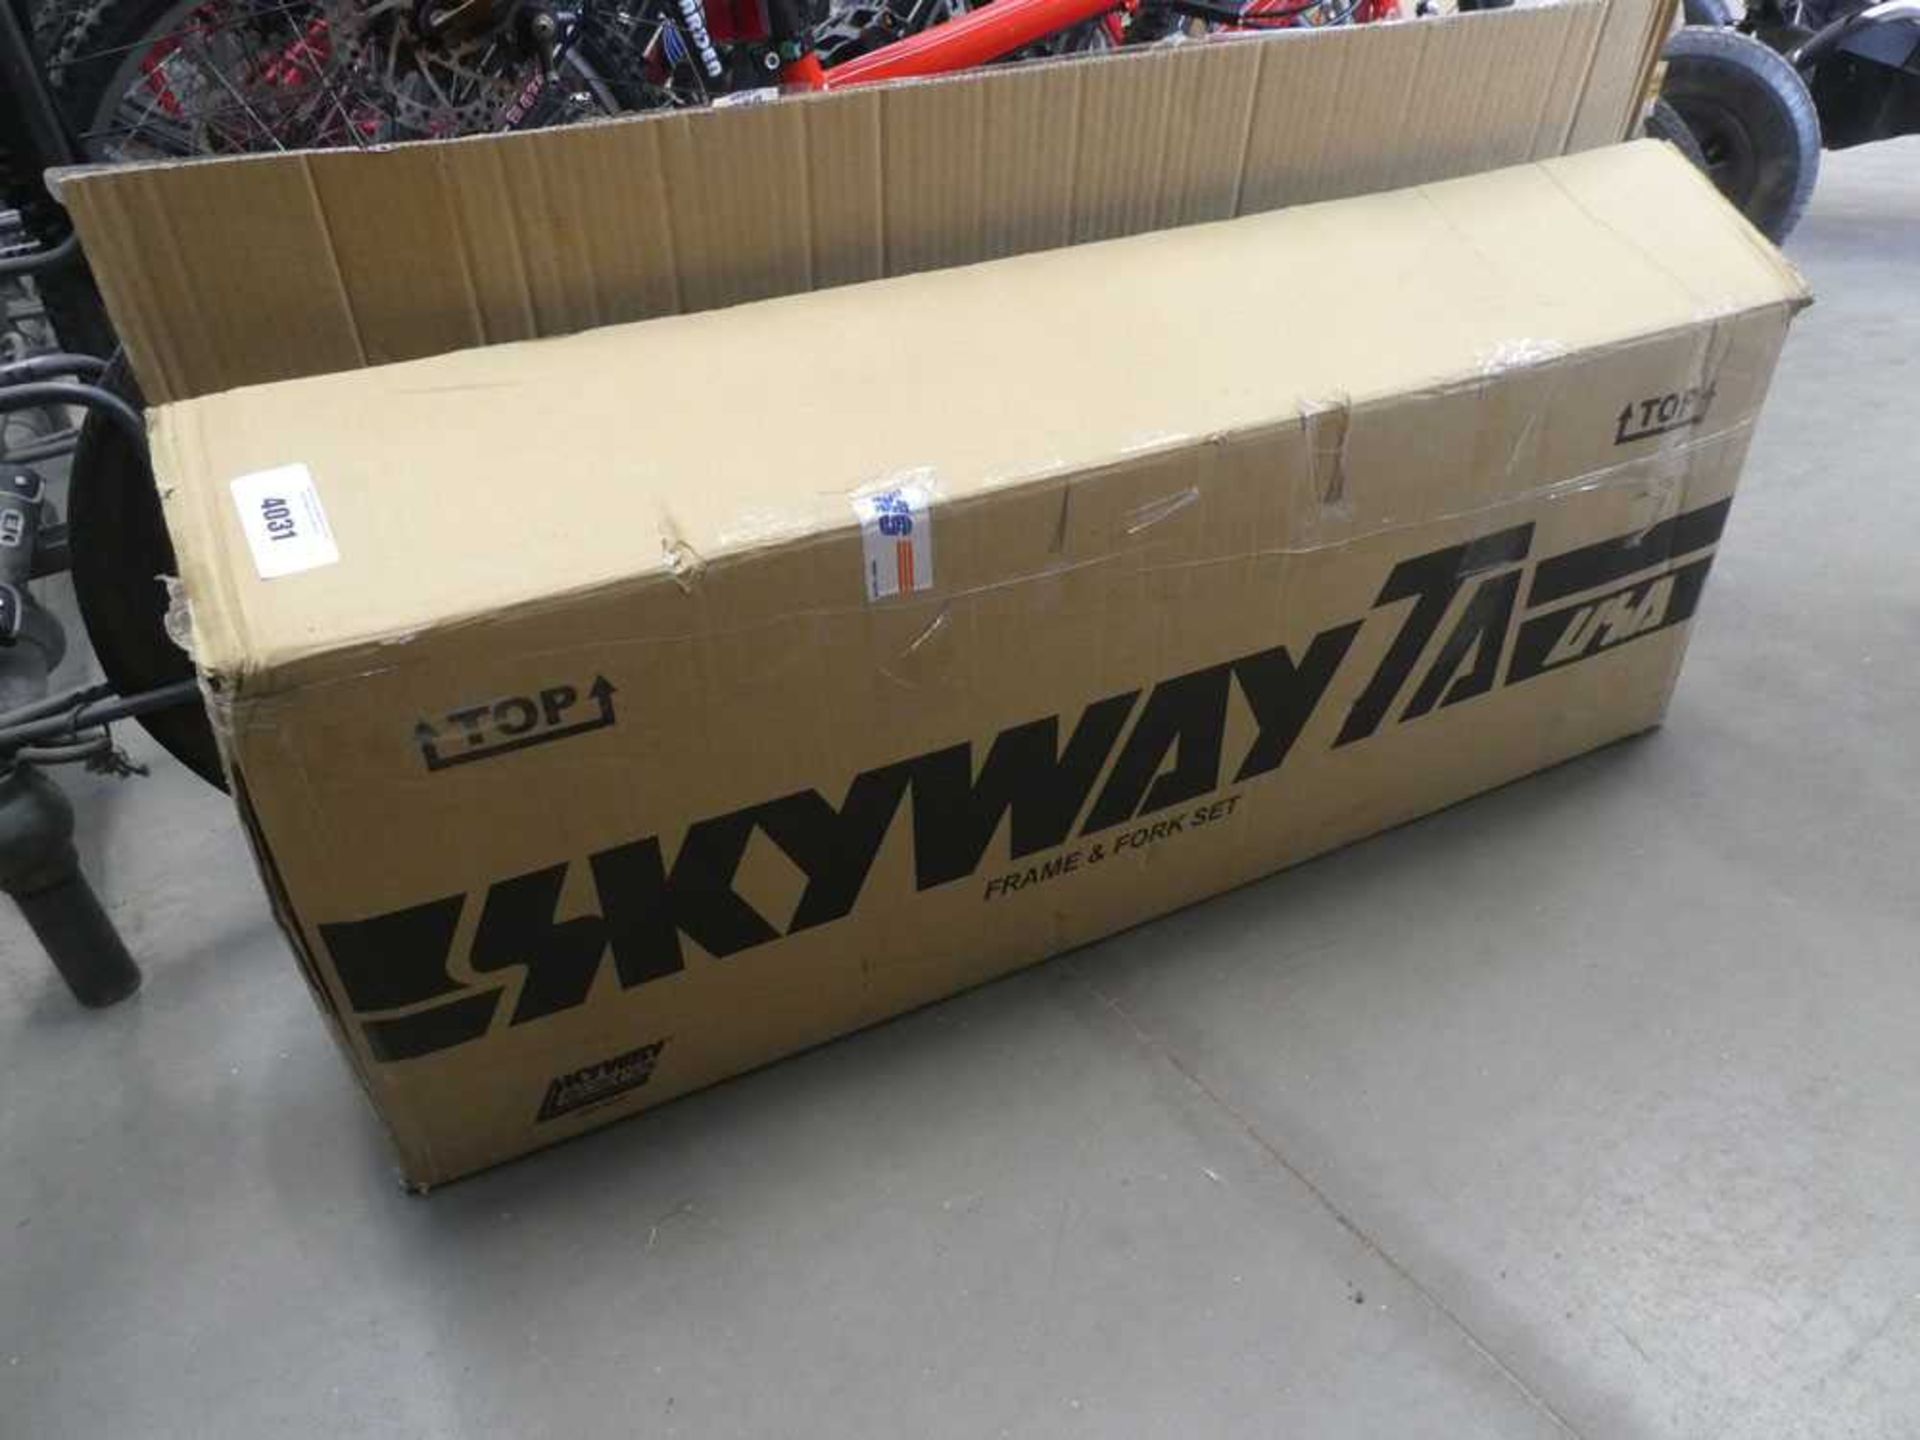 +VAT Box of Skyway frame and fork set for bike